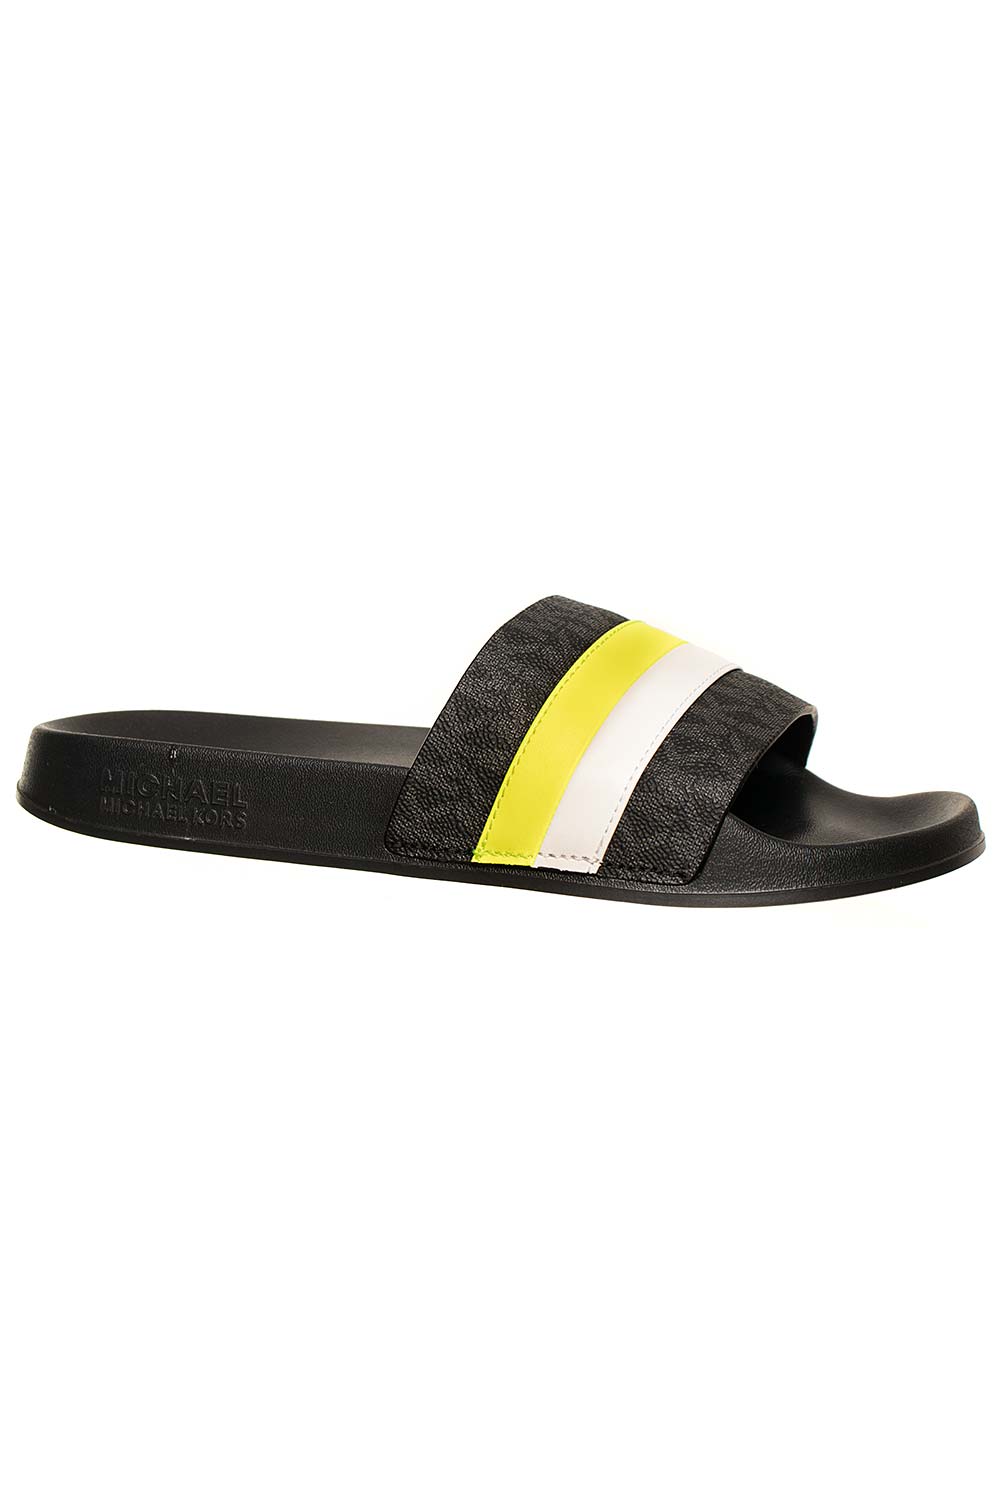 Michael Kors dámské pantofle černé s neon žlutou Velikost: EU 41